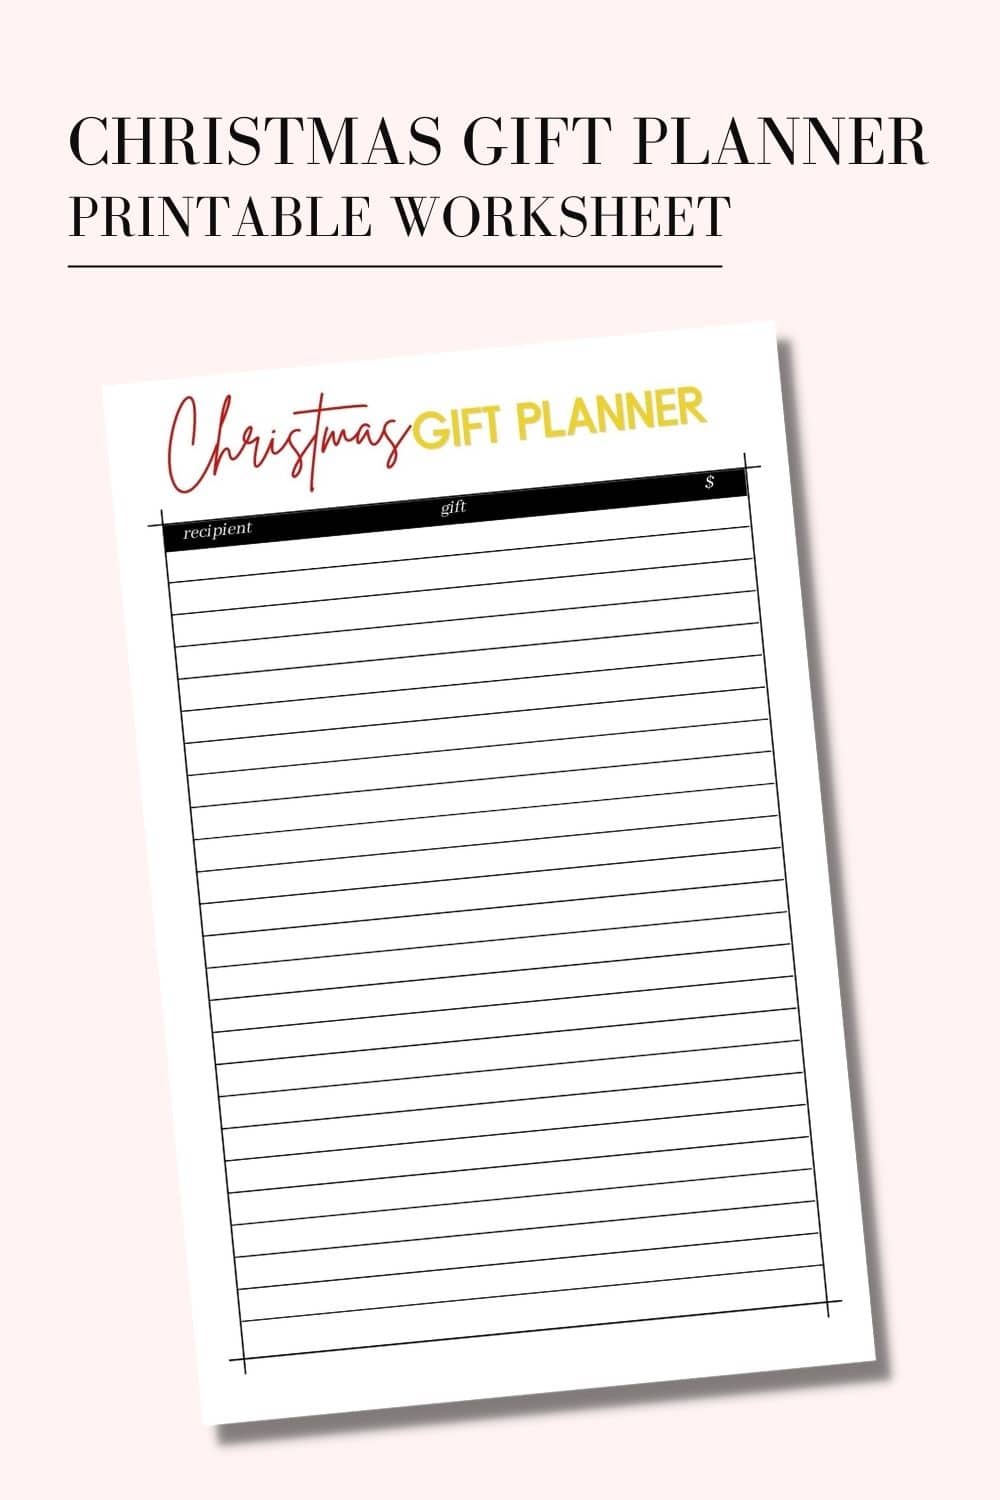 FREE Christmas Gift Guide Planner Printable 